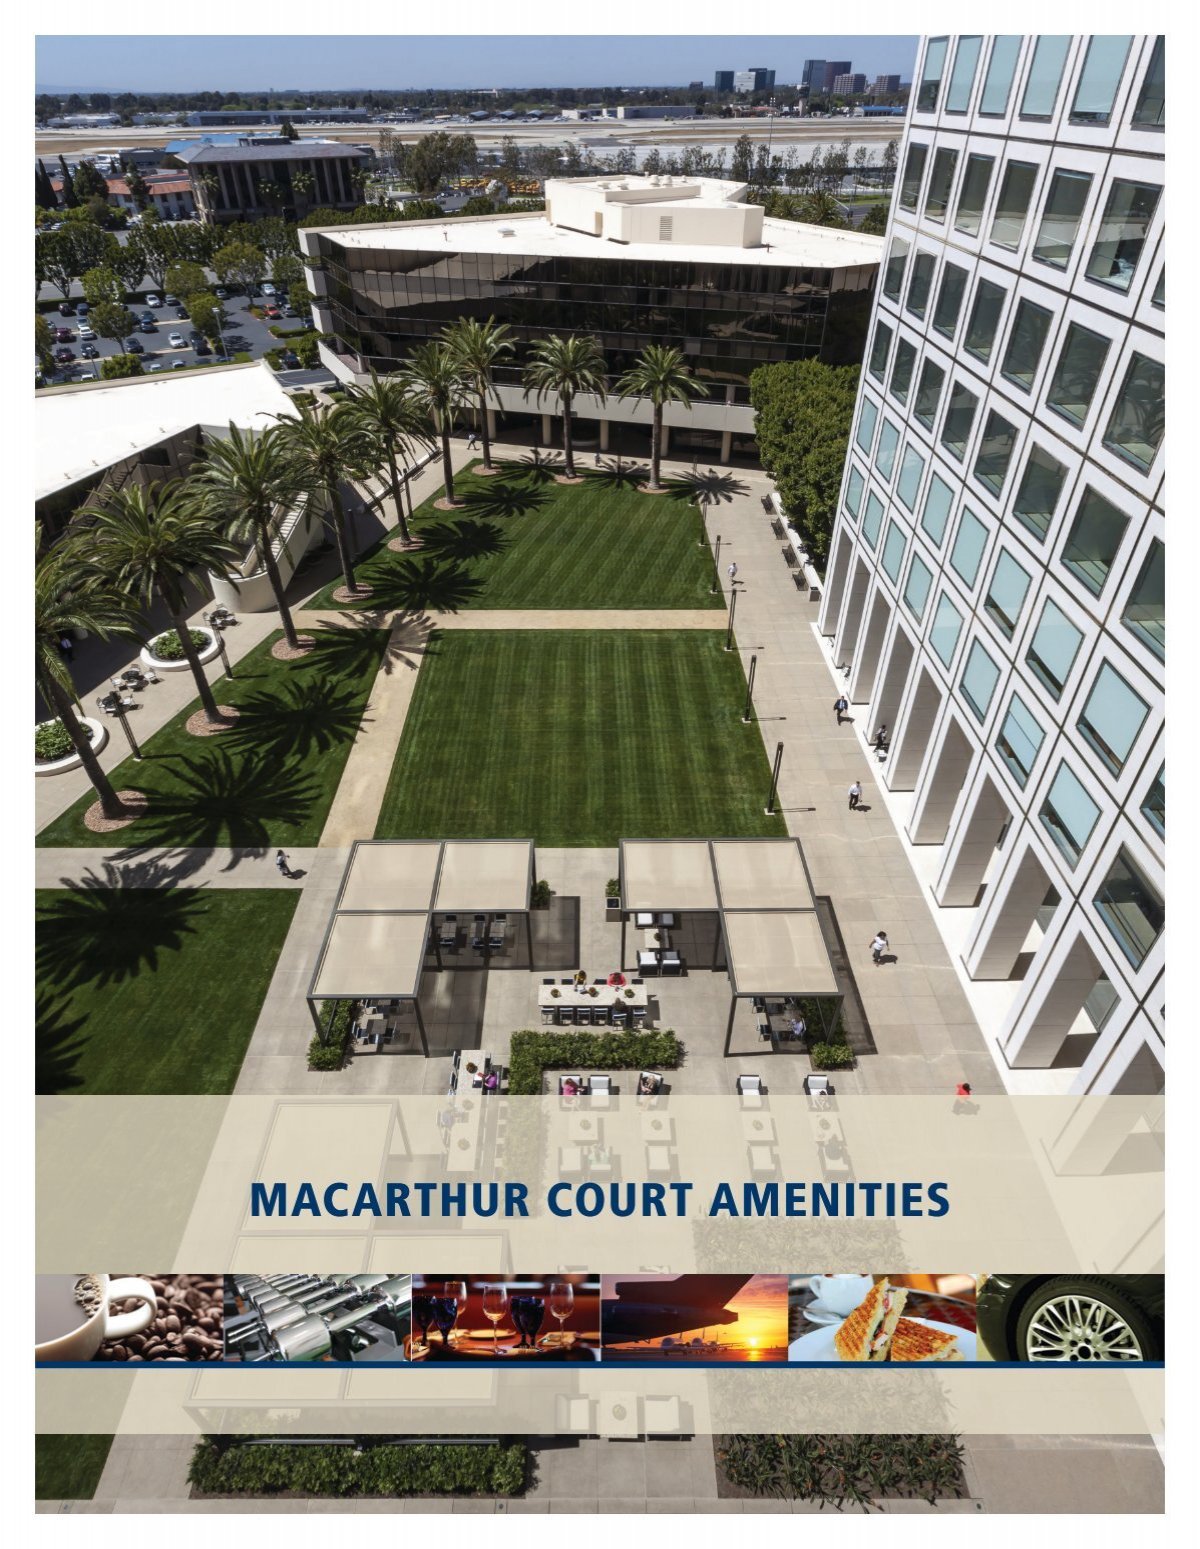 MACARTHUR COURT AMENITIES IrvineCompanyOffice com